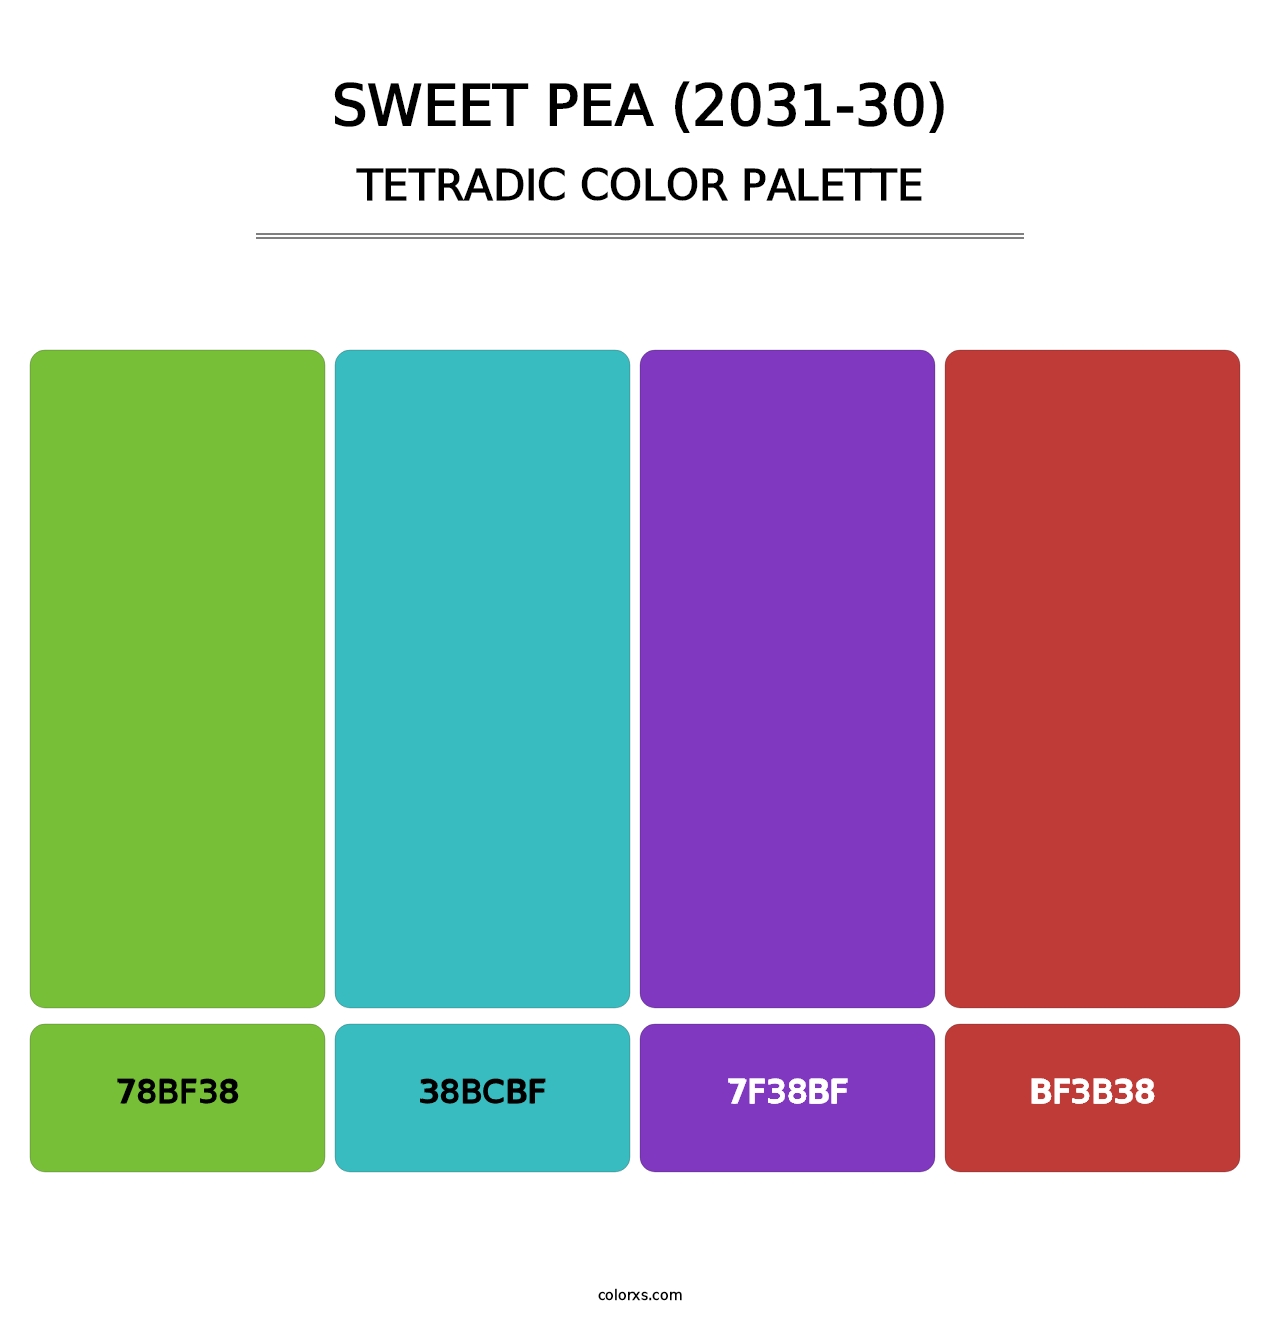 Sweet Pea (2031-30) - Tetradic Color Palette